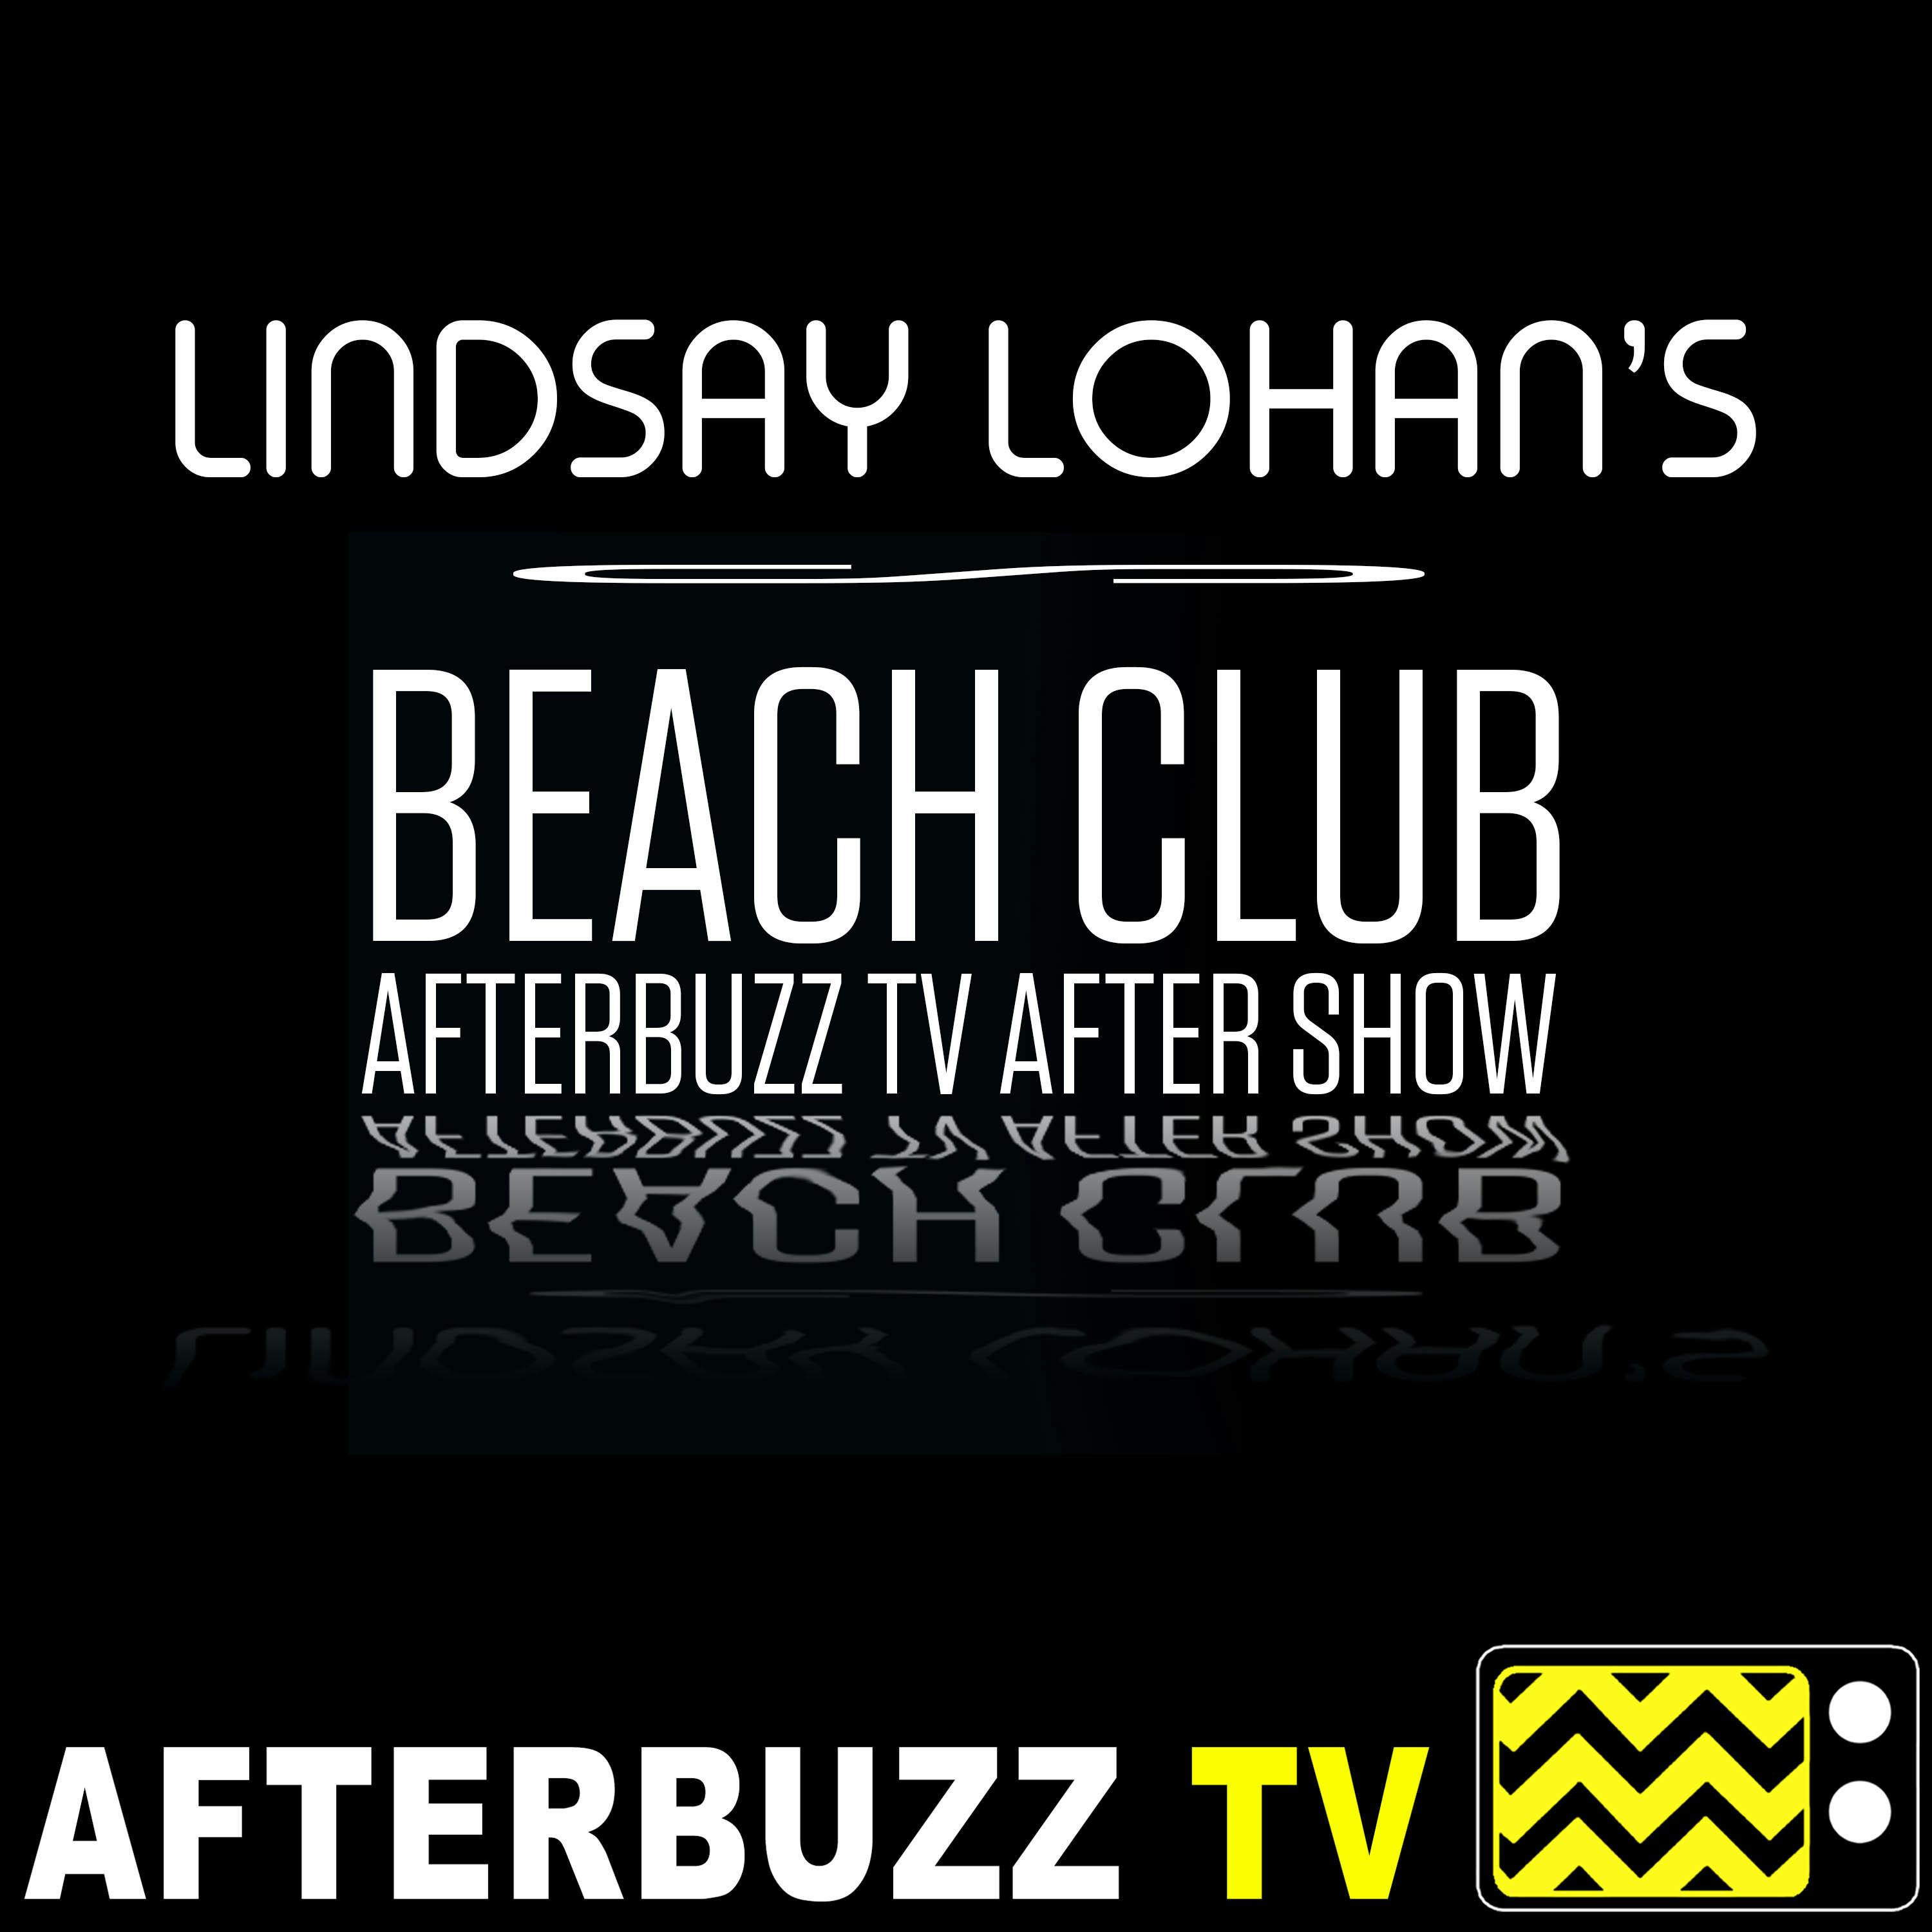 Lindsay Lohan's Beach Club S:1 Crossing Lindsay E:6 Review